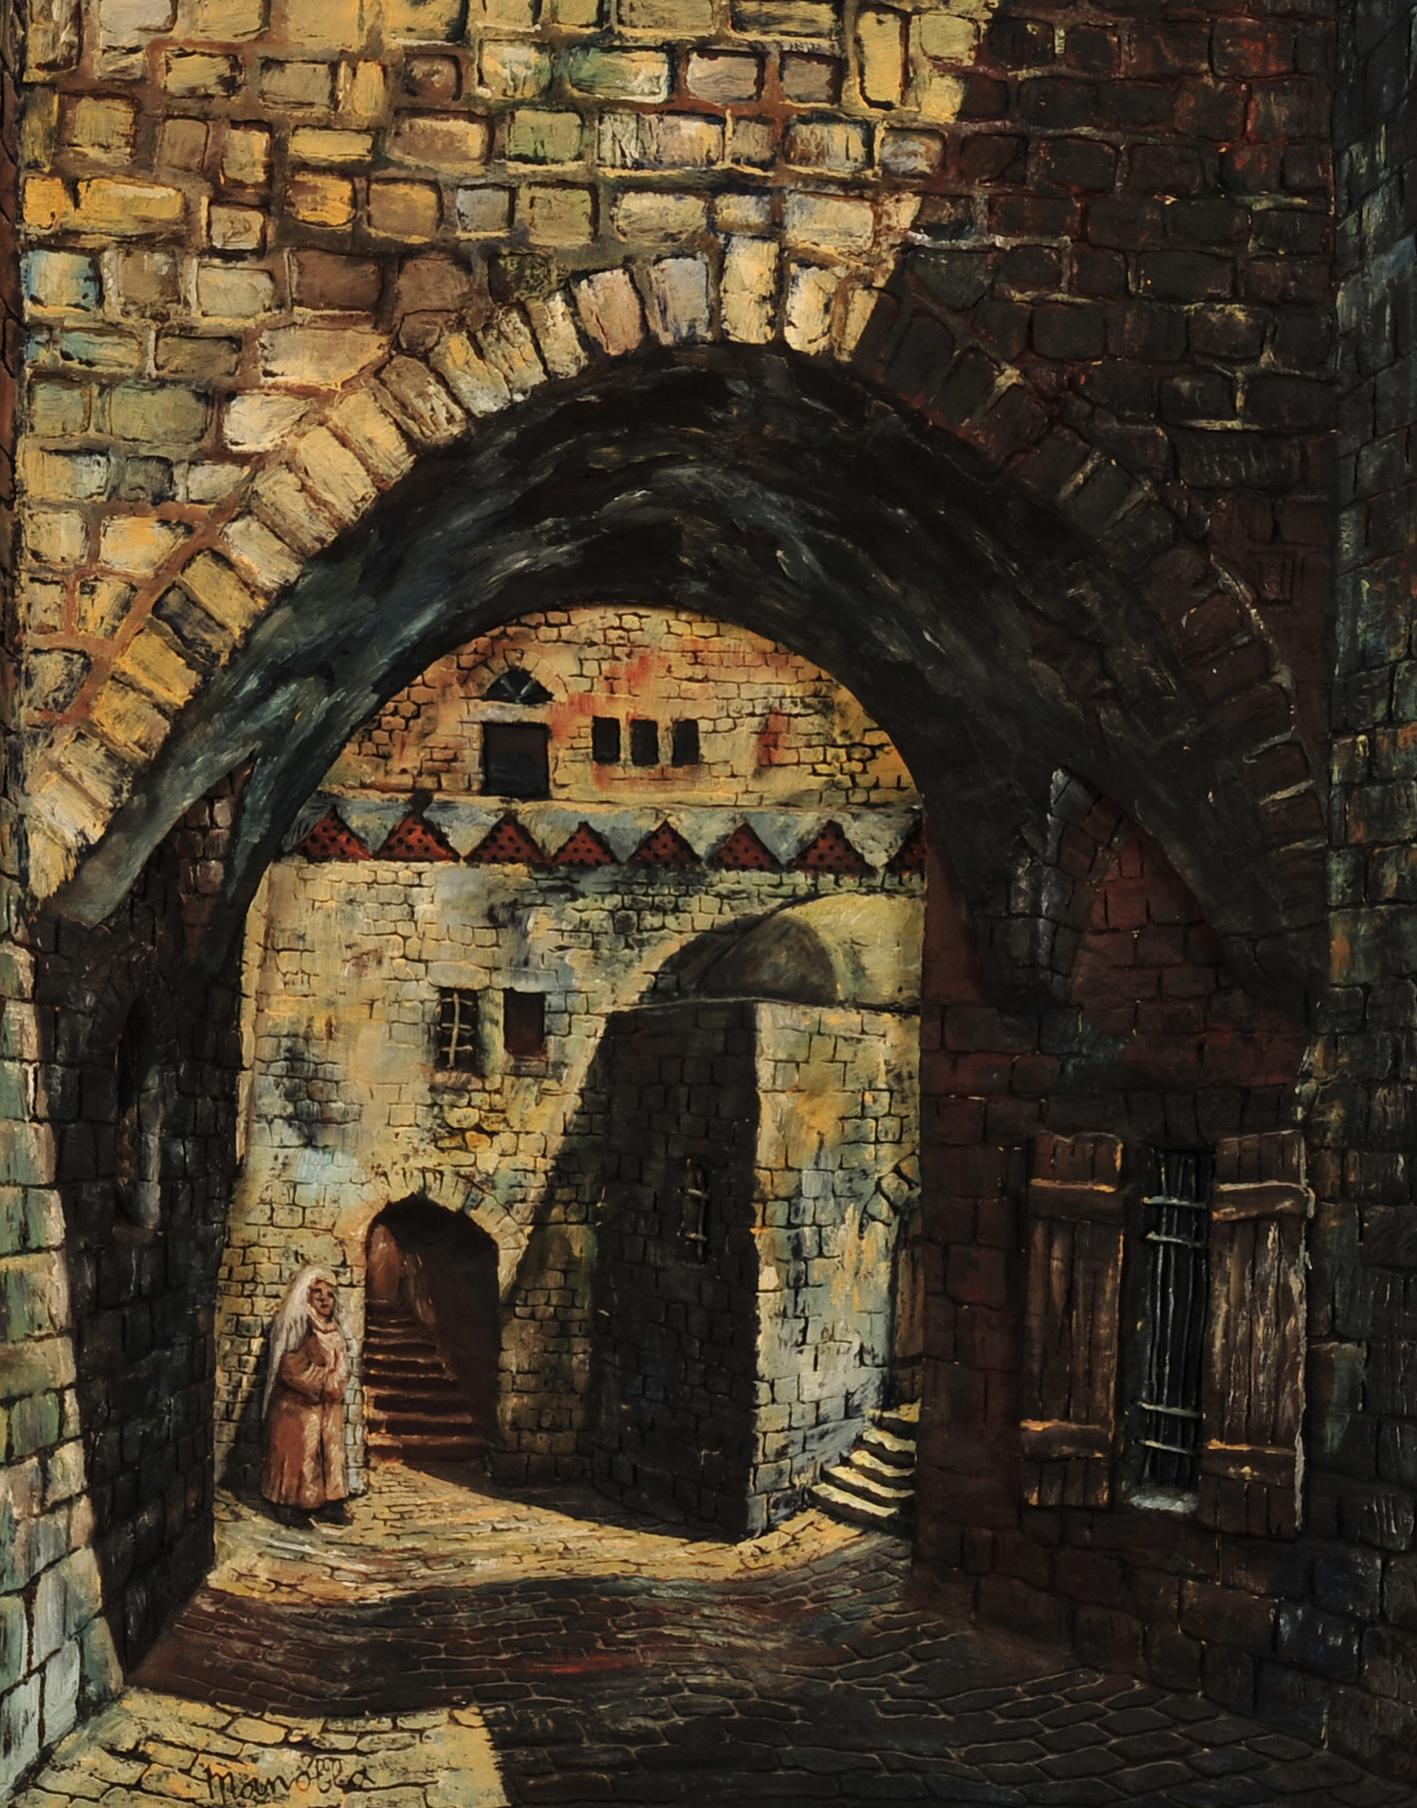 Streets of Jerusalem - Painting by Manobla